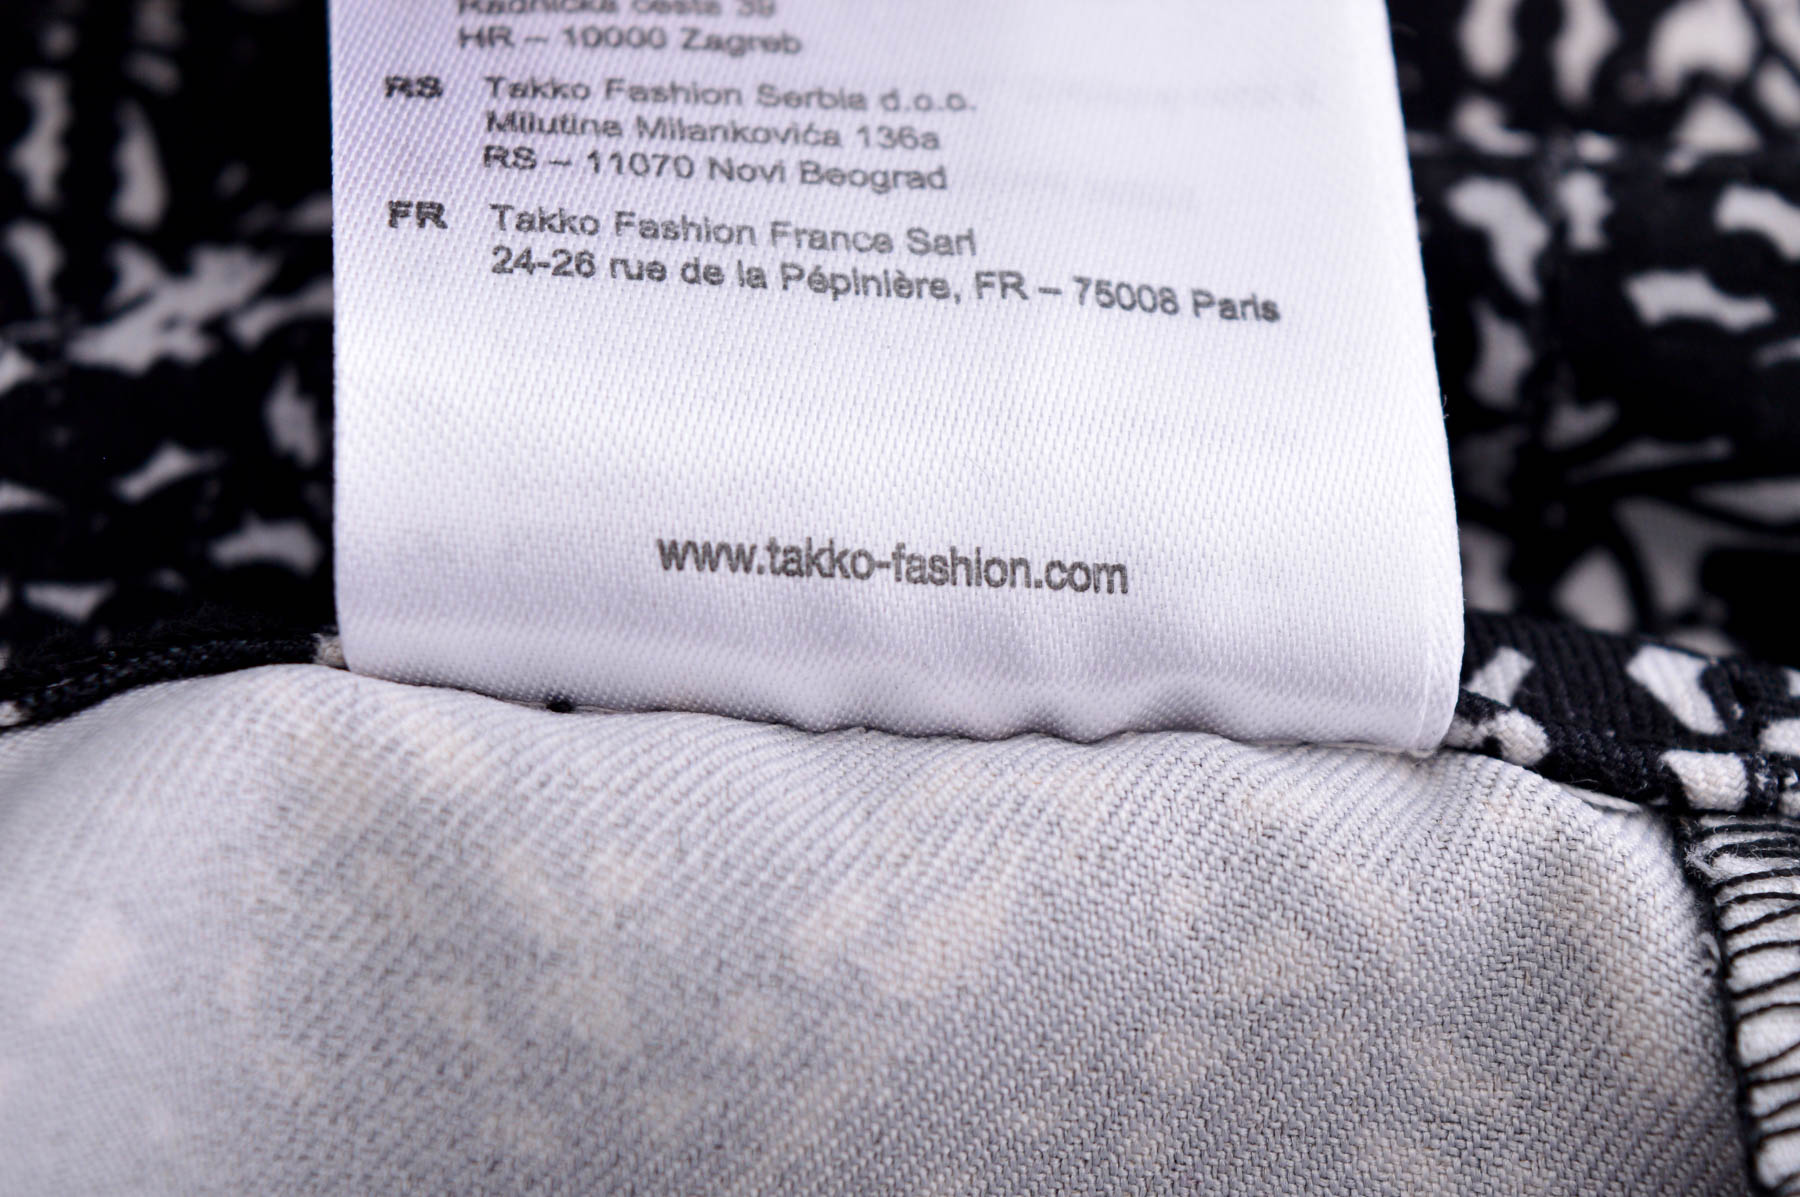 Women's trousers - Takko Fashion - 2